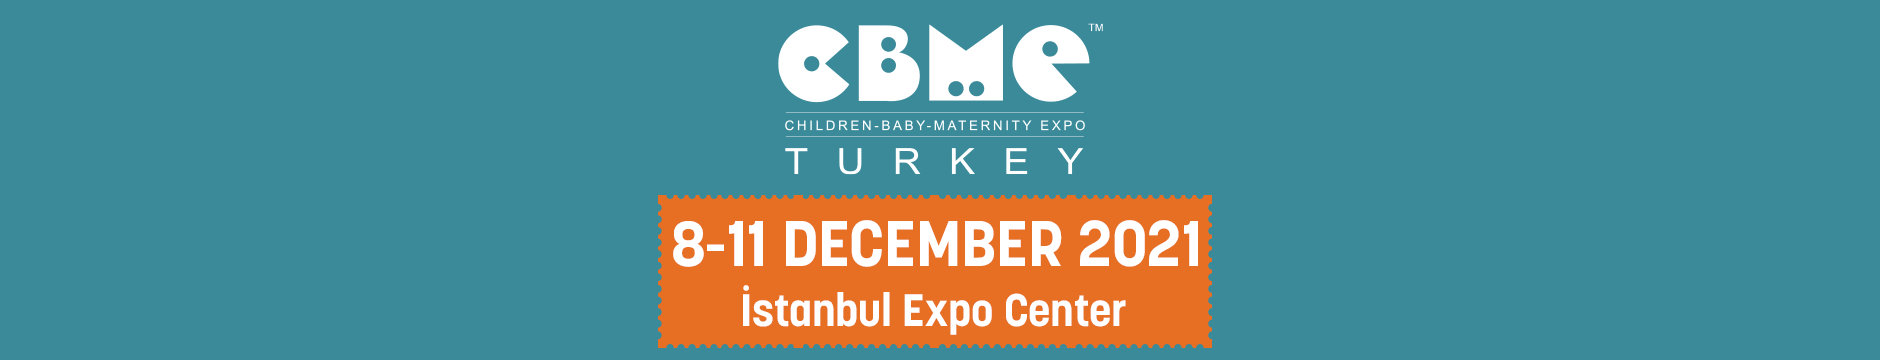 exhibit at CBME Turkey